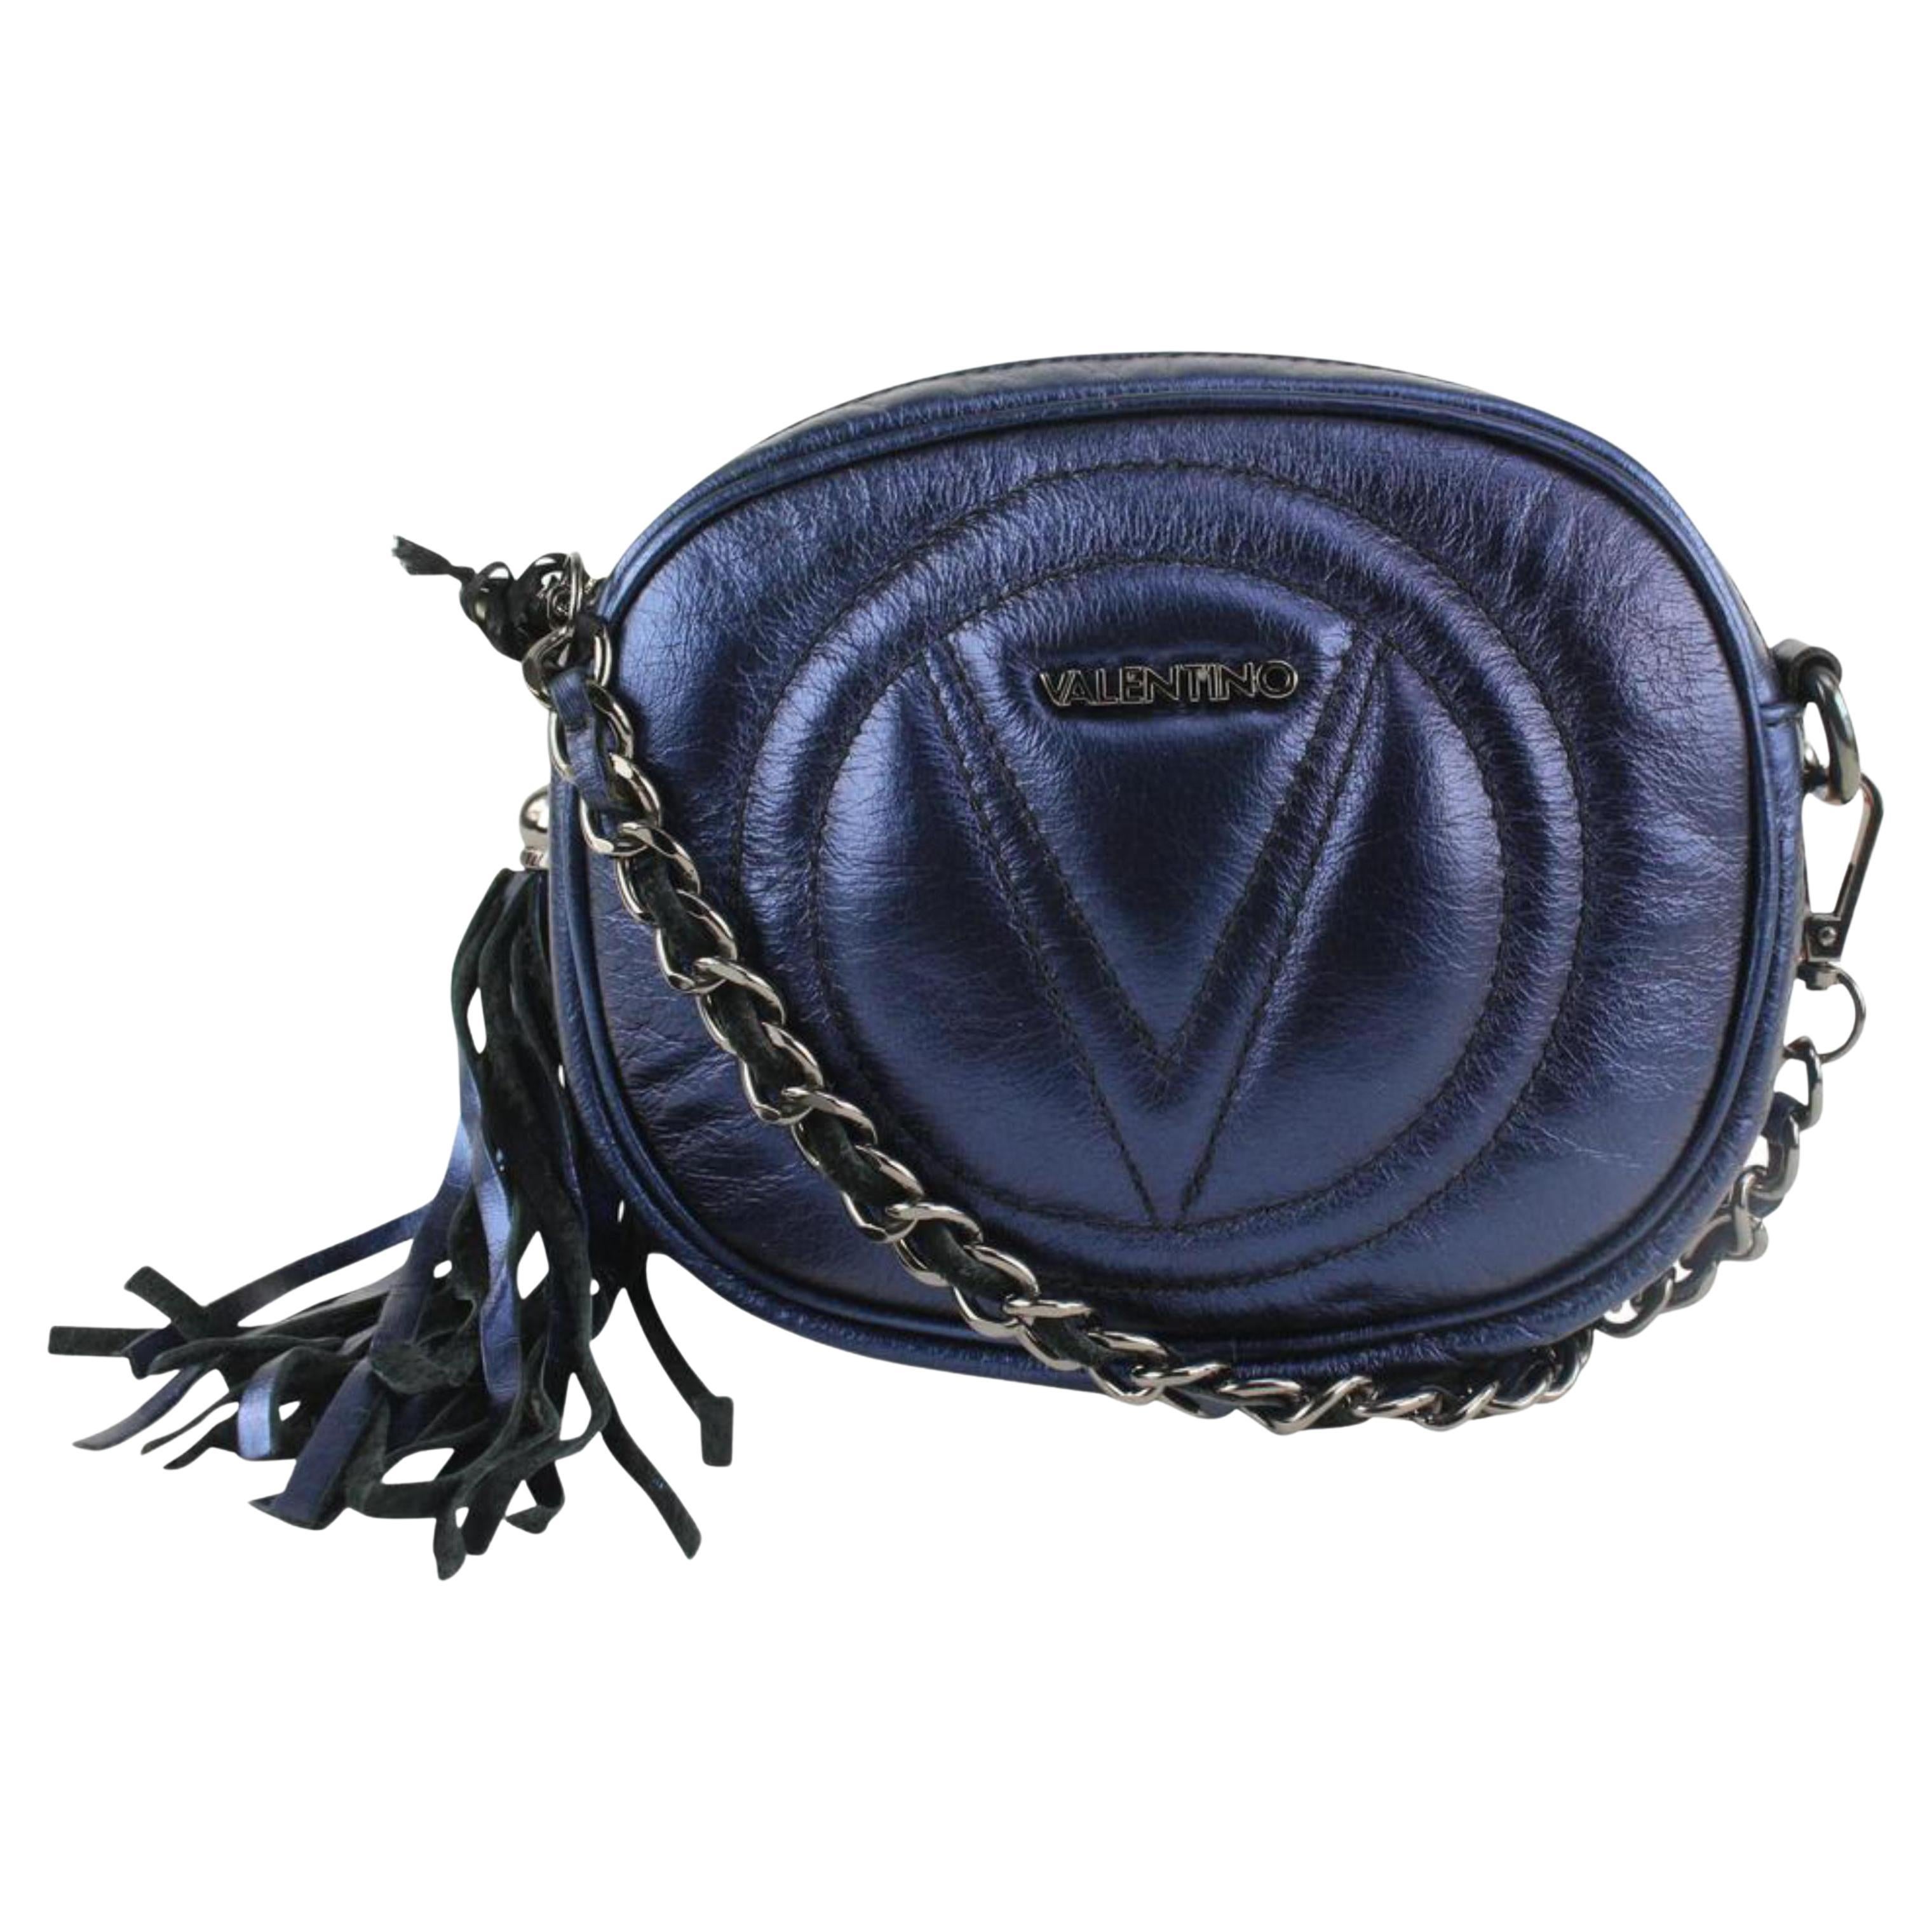 Mario Valentino Metallic Navy Nina Crosssbody Chain Bag 24V0 Sale at